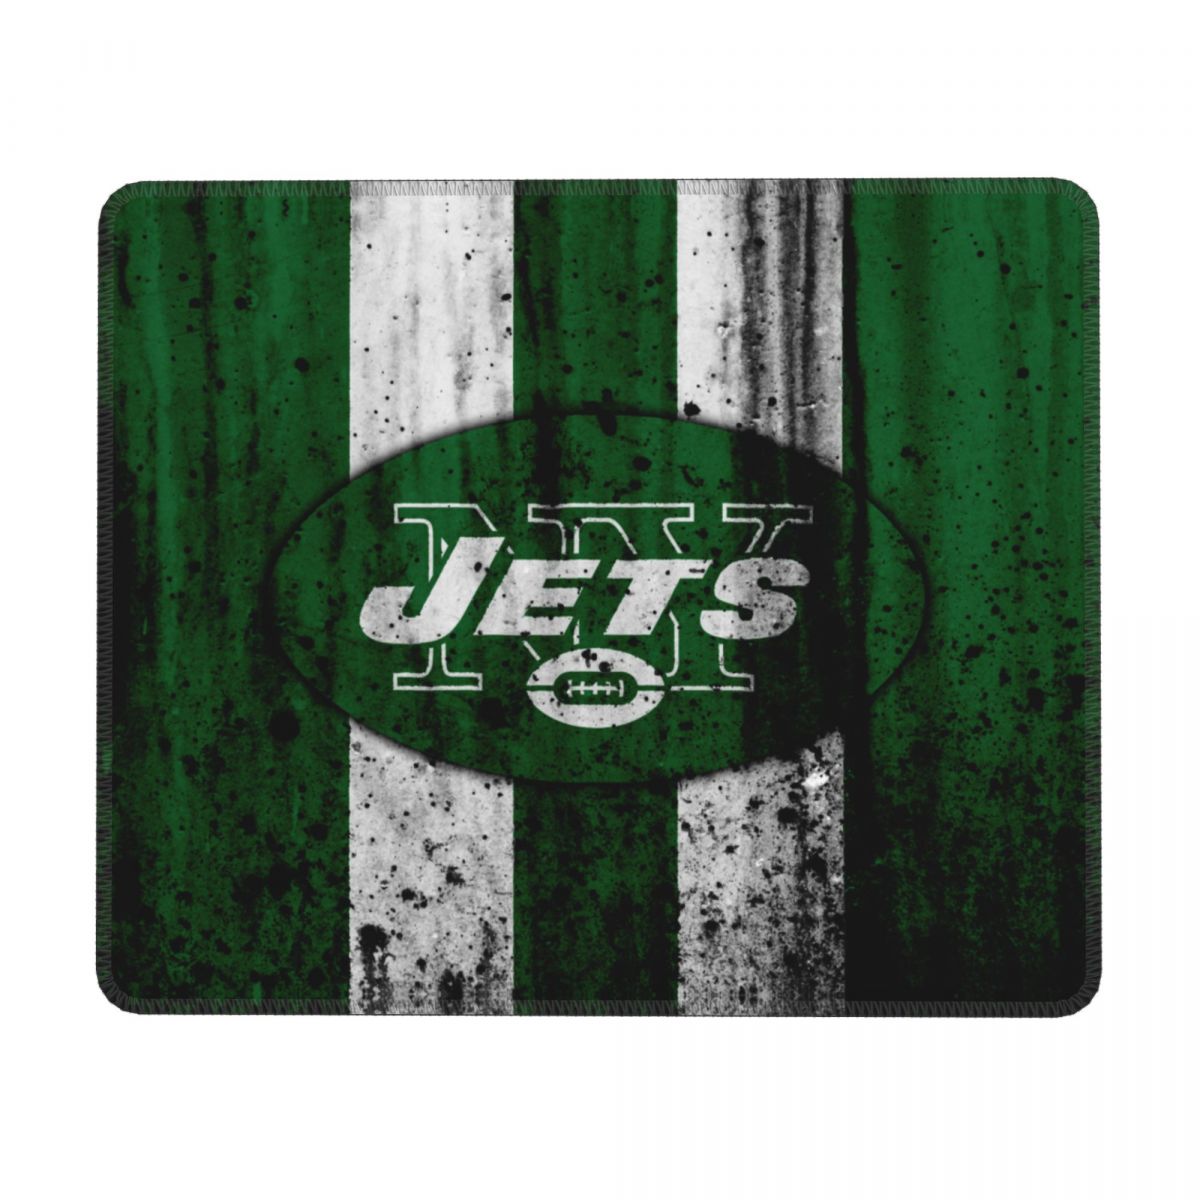 New York Jets Dirt Logo Square Rubber Base MousePads